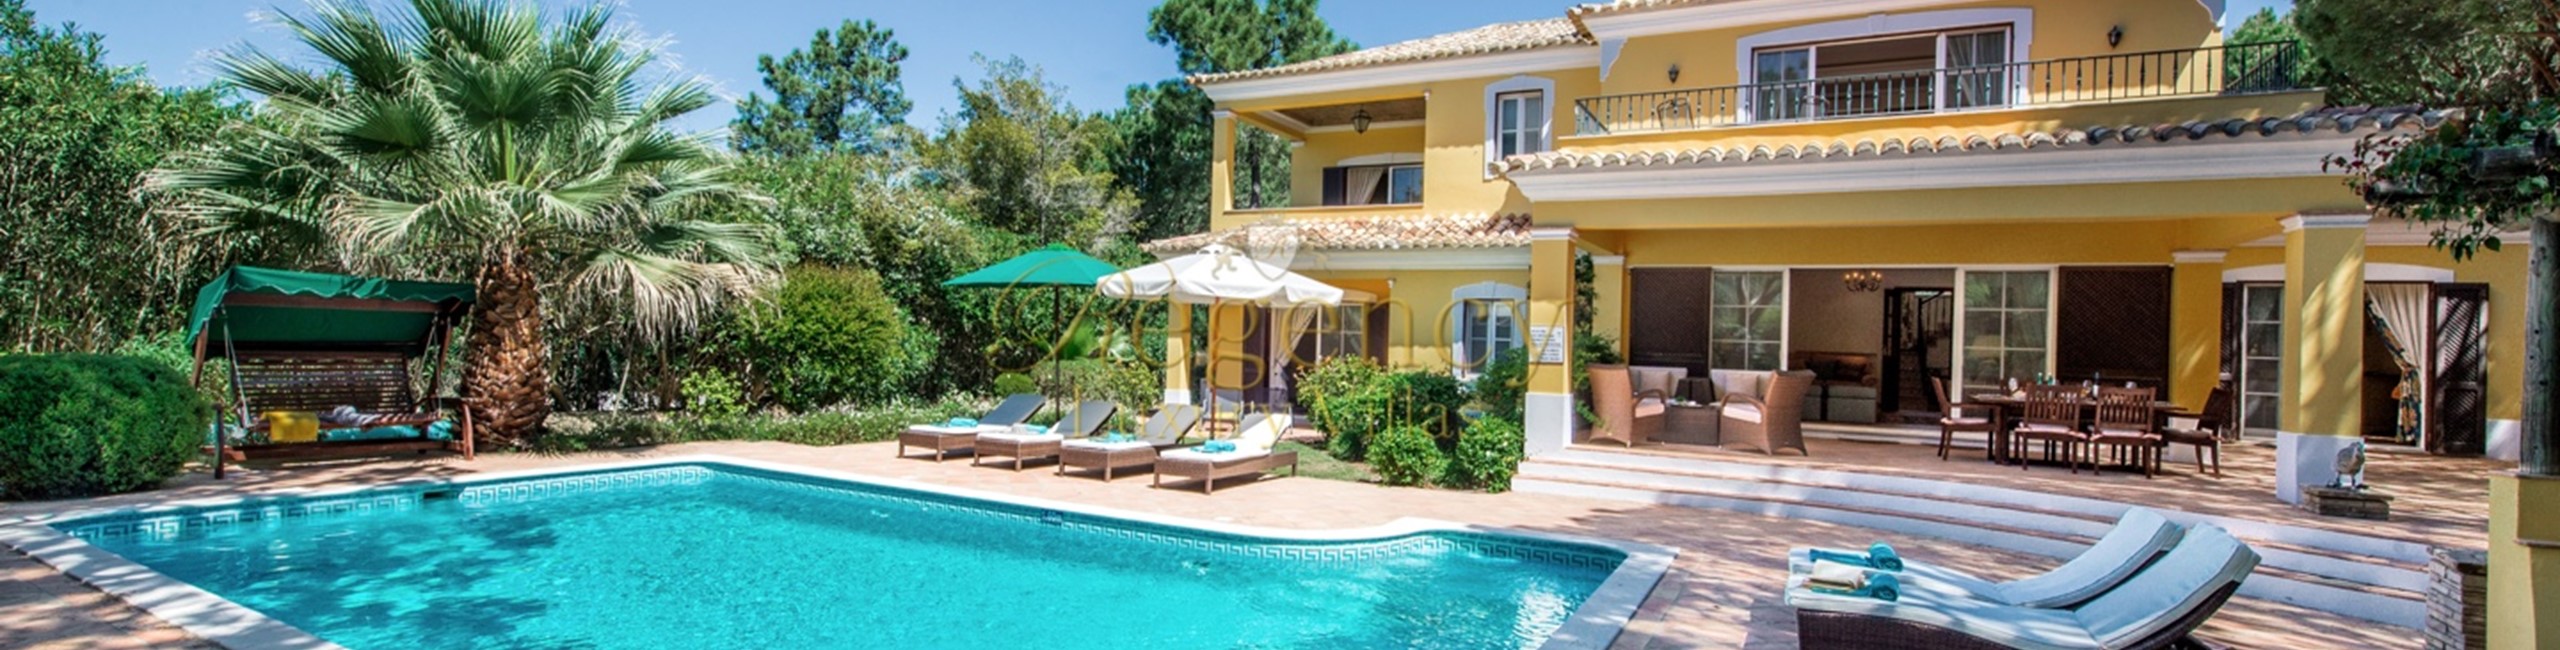 Quinta Do Lago Villa To Rent With 4 Bedrooms